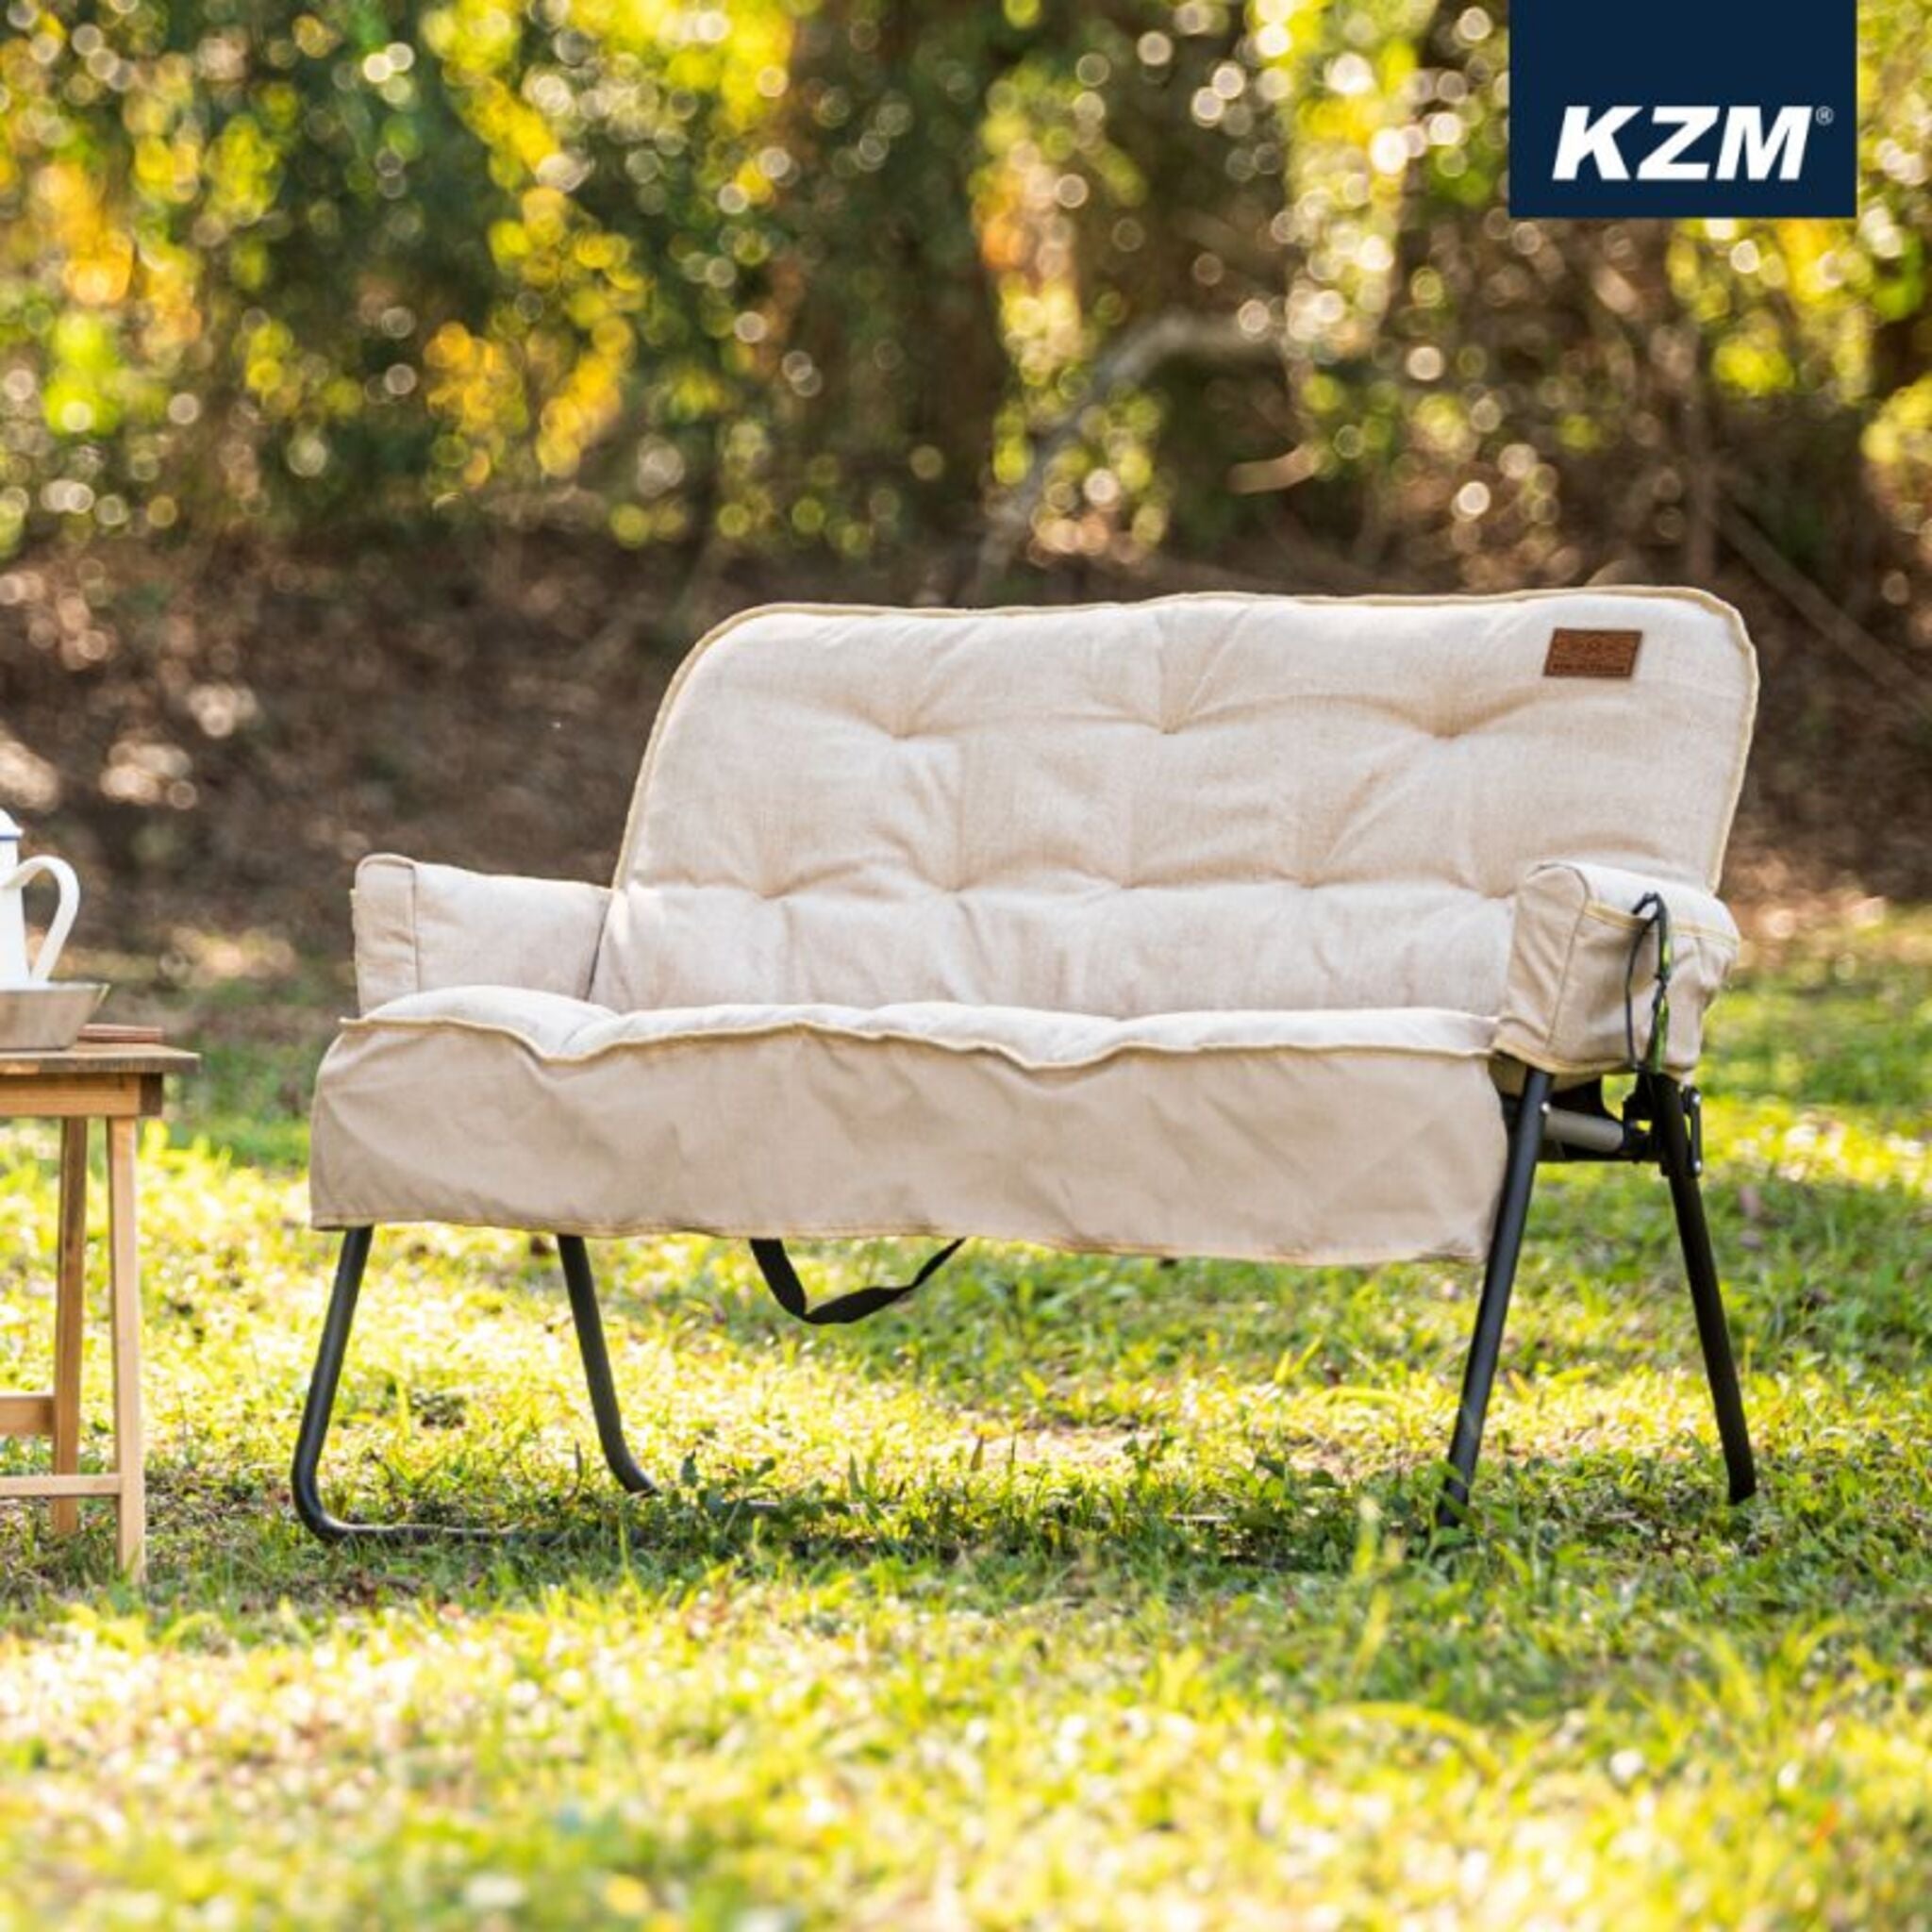 KAZMI KZM 素面雙人折疊椅專用布套/椅套 K20T1C015